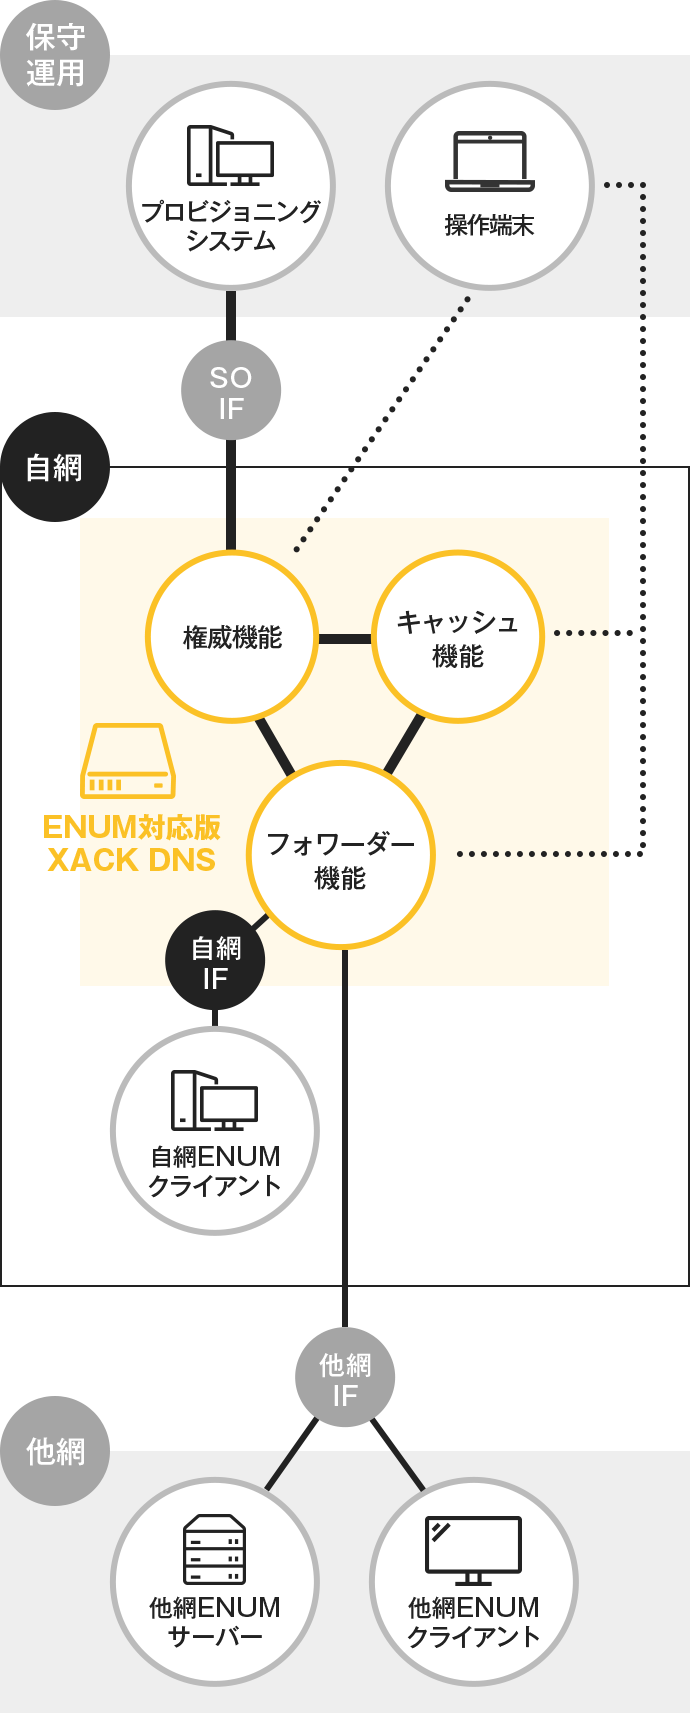 ENUM対応版 XACK DNSの図解